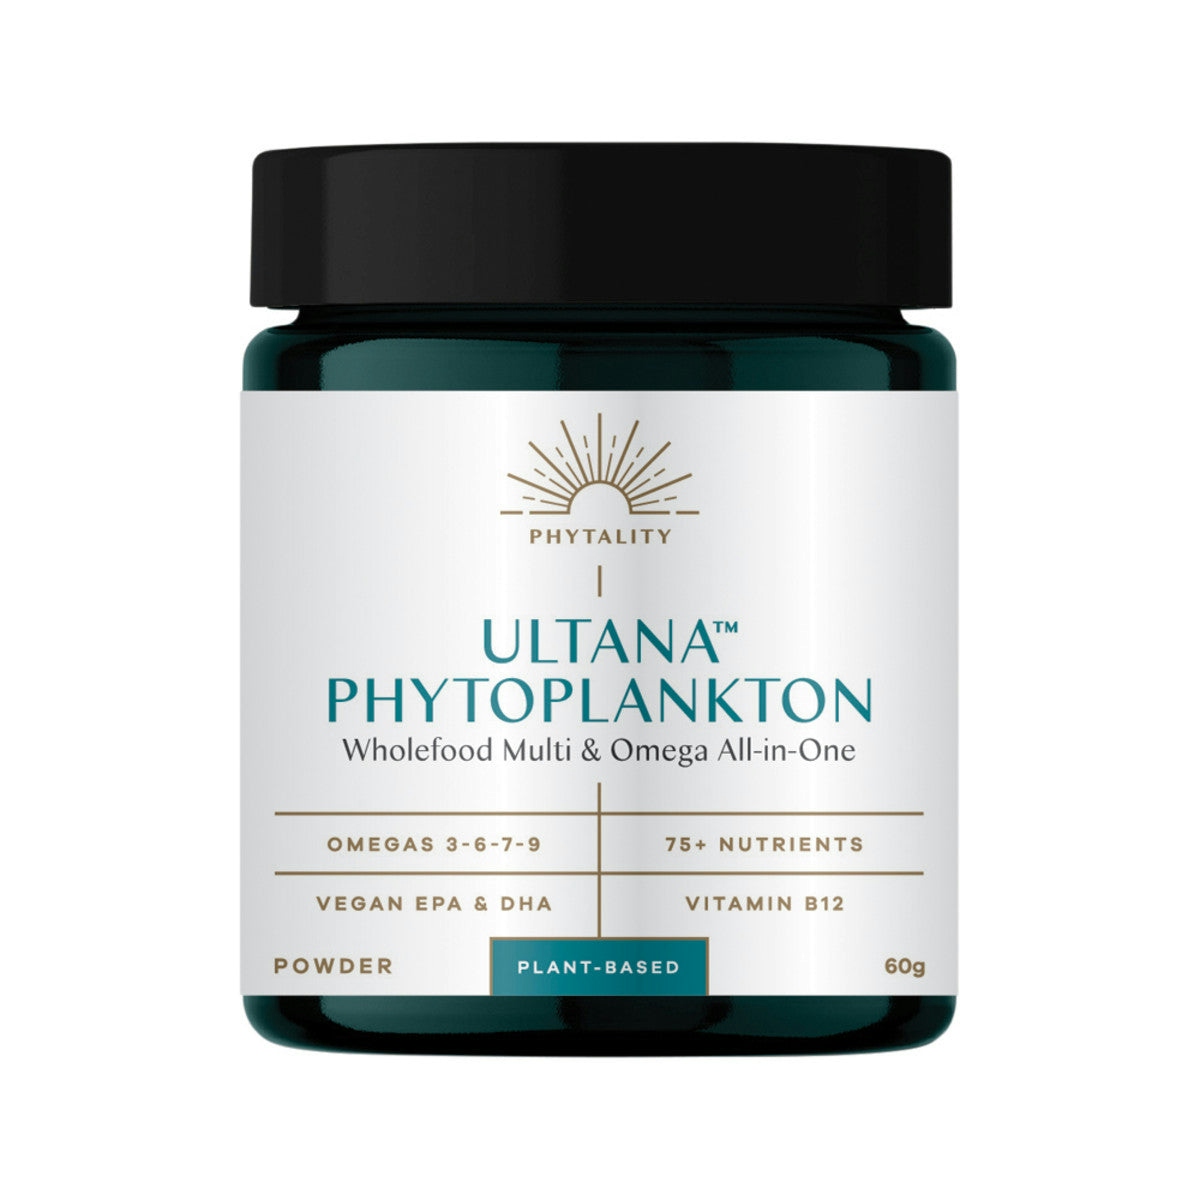 Phytality ULTANA Phytoplankton Wholefood Multi & Omega All-in-One Powder 60g